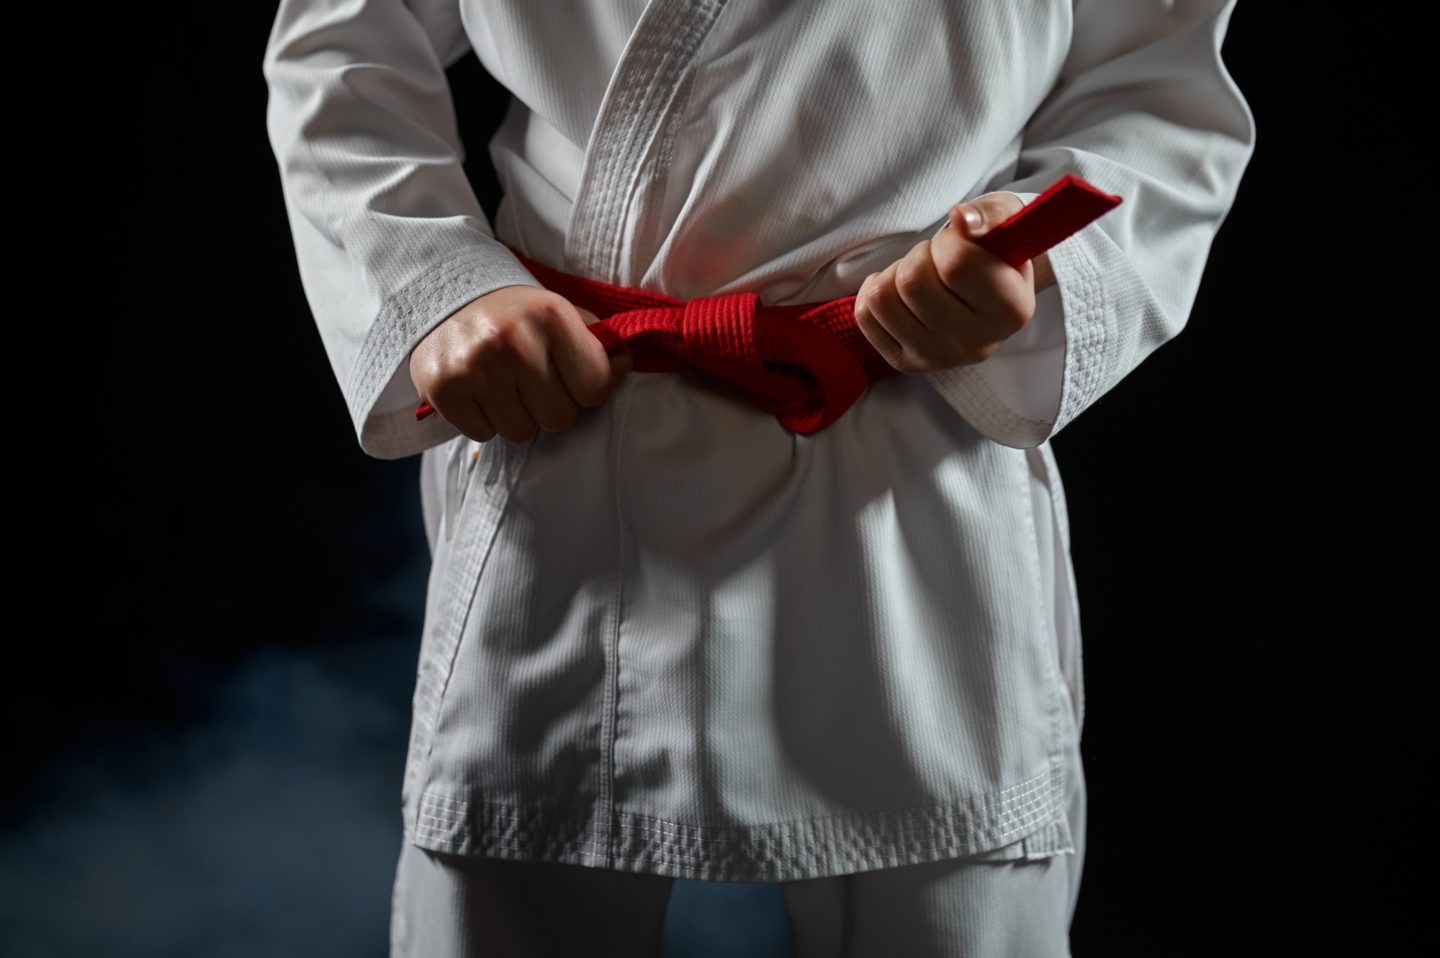 Karate fighter in white kimono having red belt